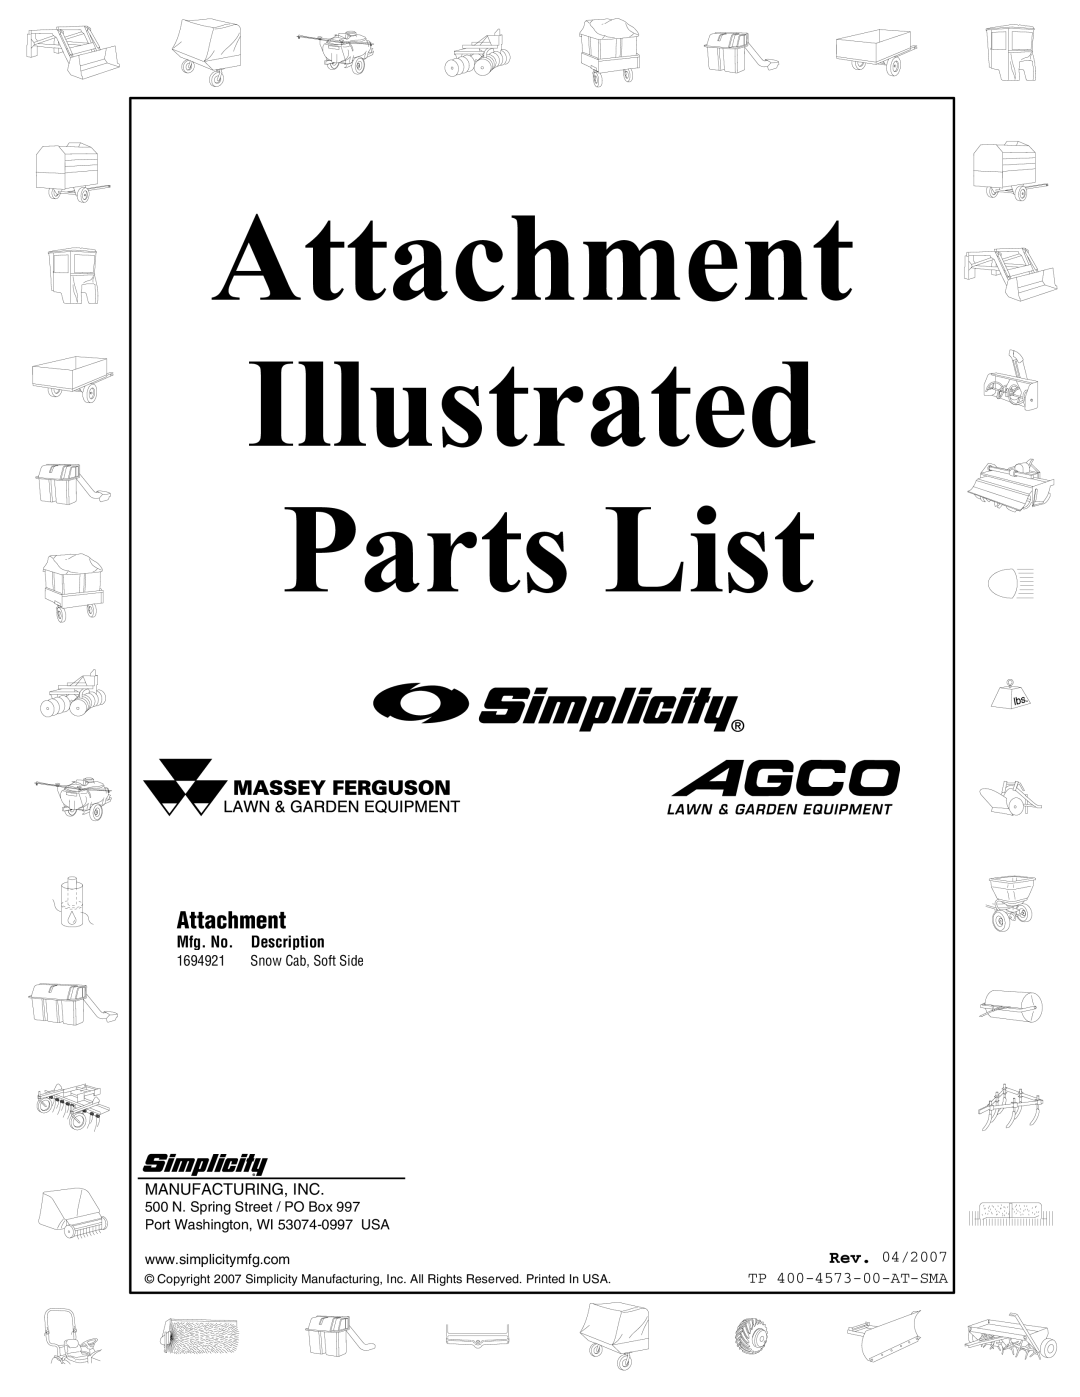 Snapper manual Attachment, Mfg. No. Description, Rev. 04/2007, TP 400-4573-00-AT-SMA, Illustrated, Parts List 